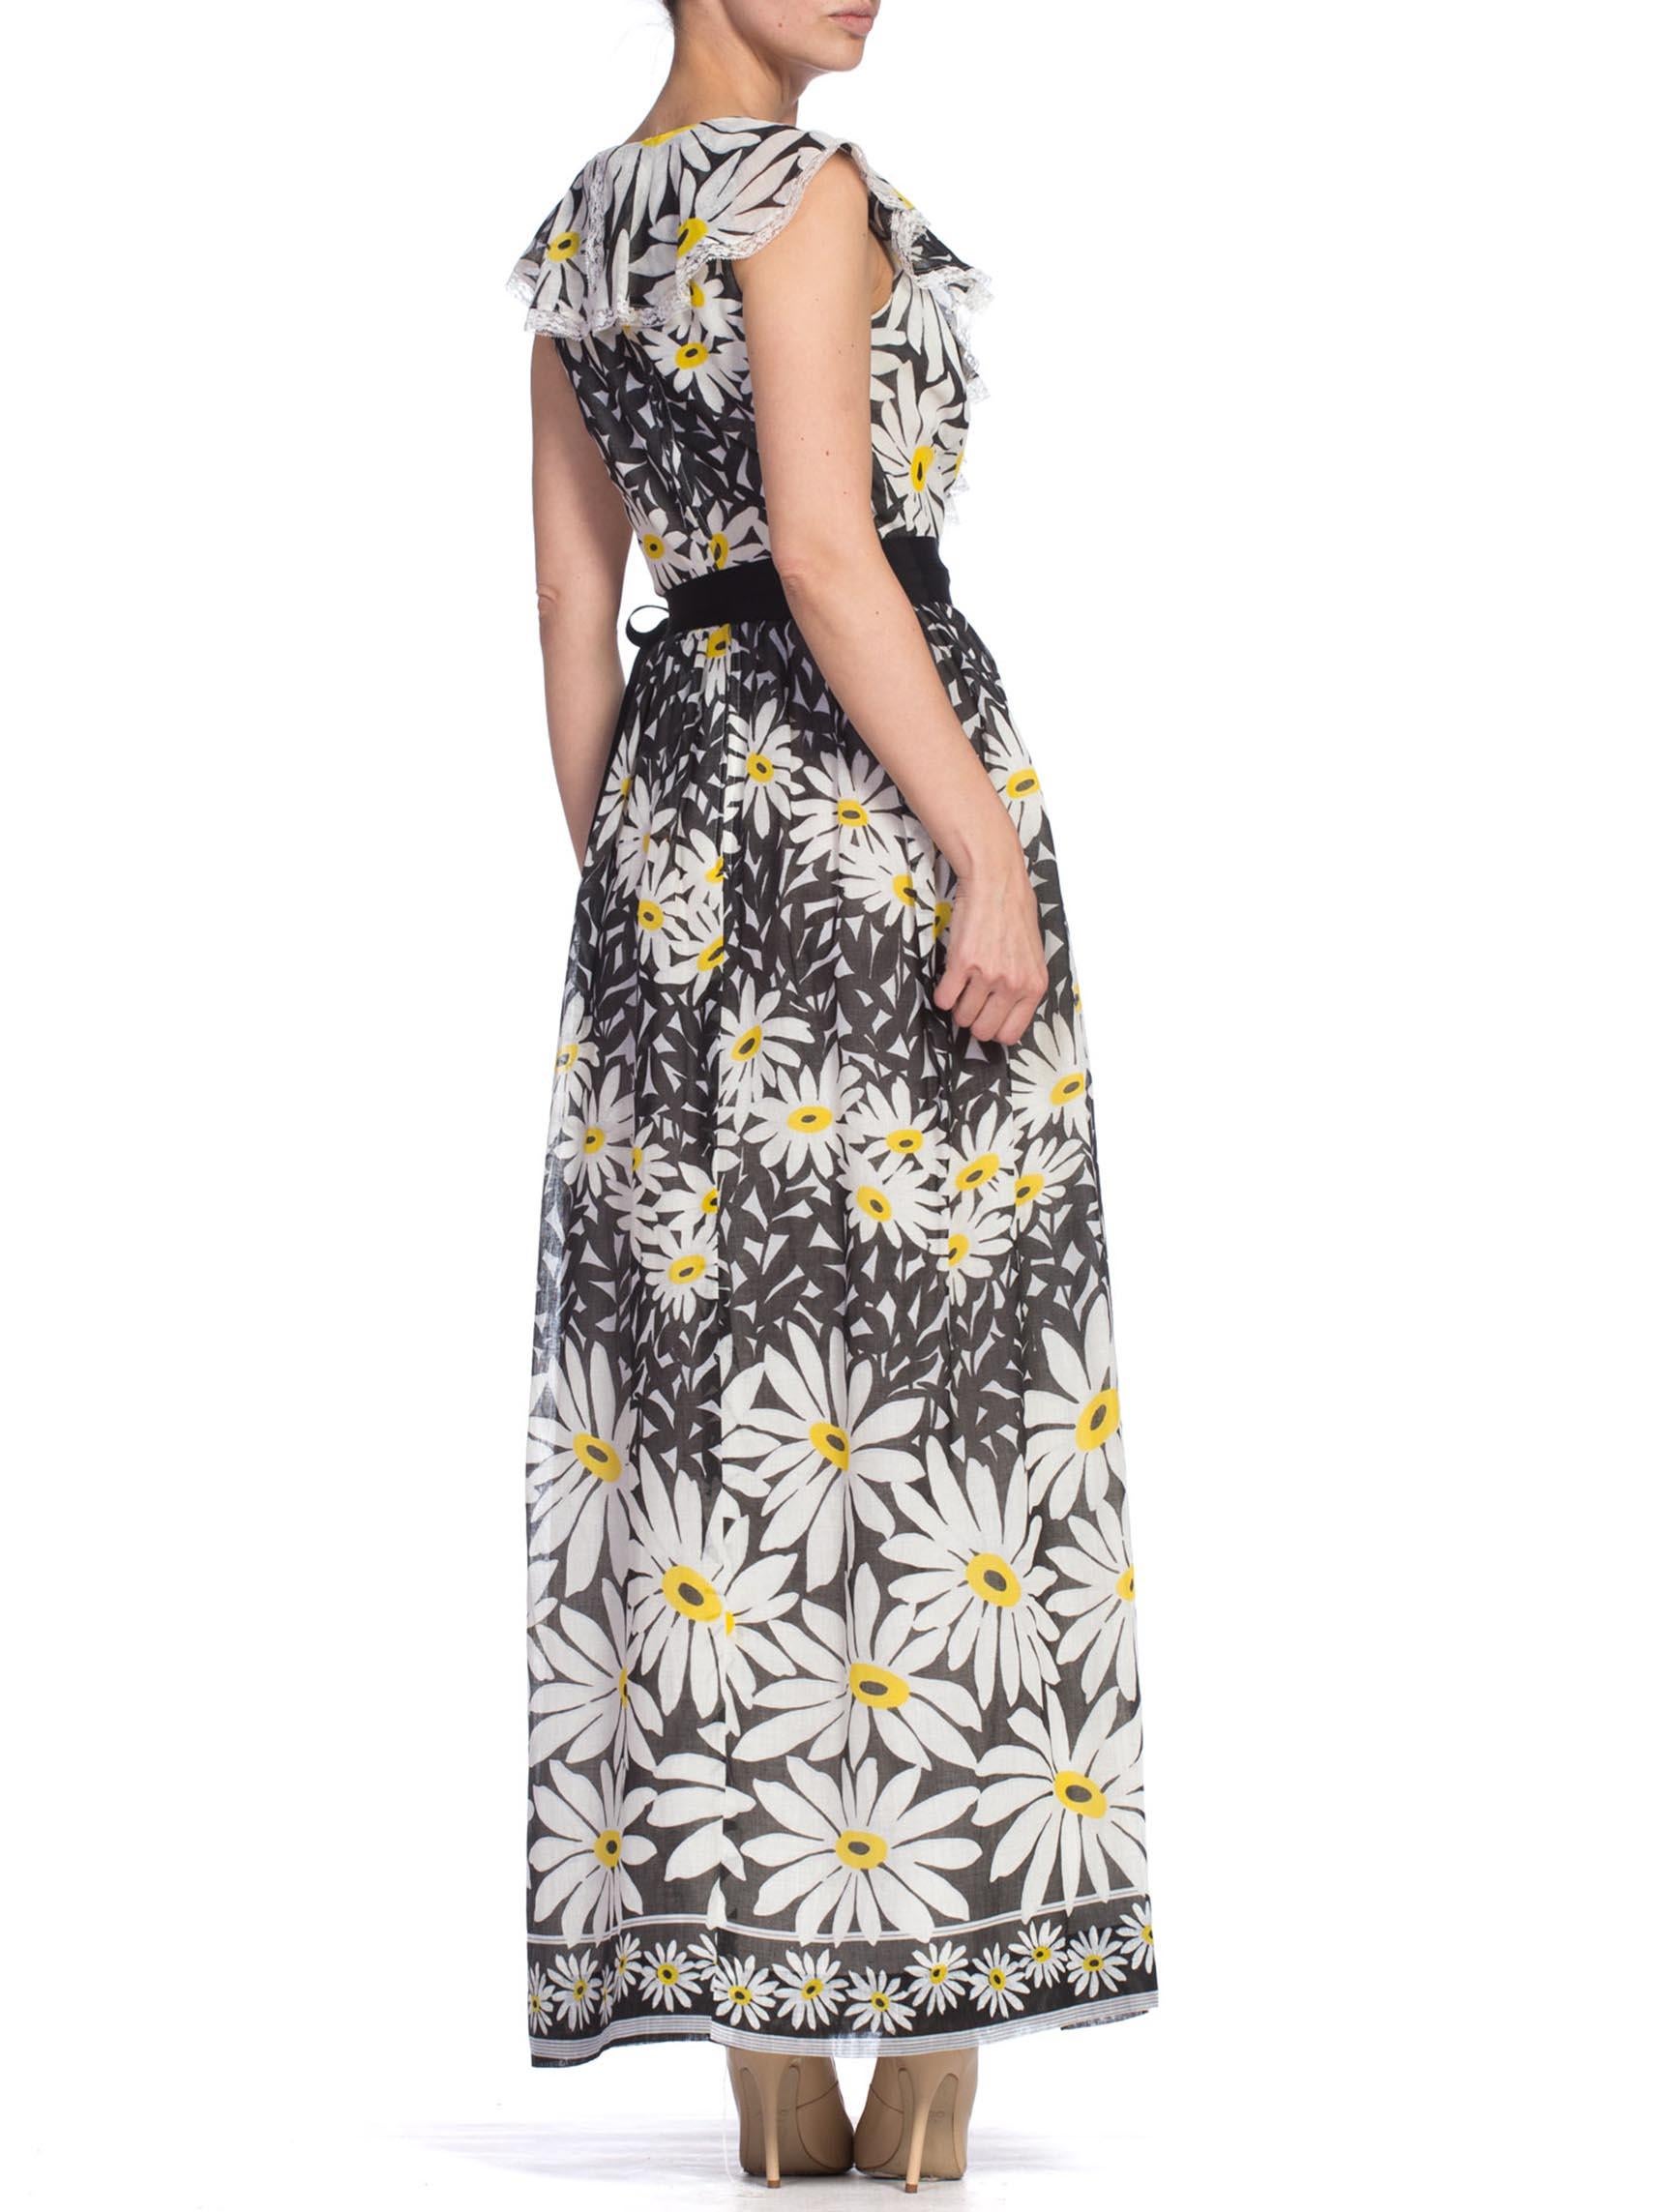 Women's 1970S Black & White Cotton Voile Flower Power Daisy Print Ruffled Lace Dress For Sale